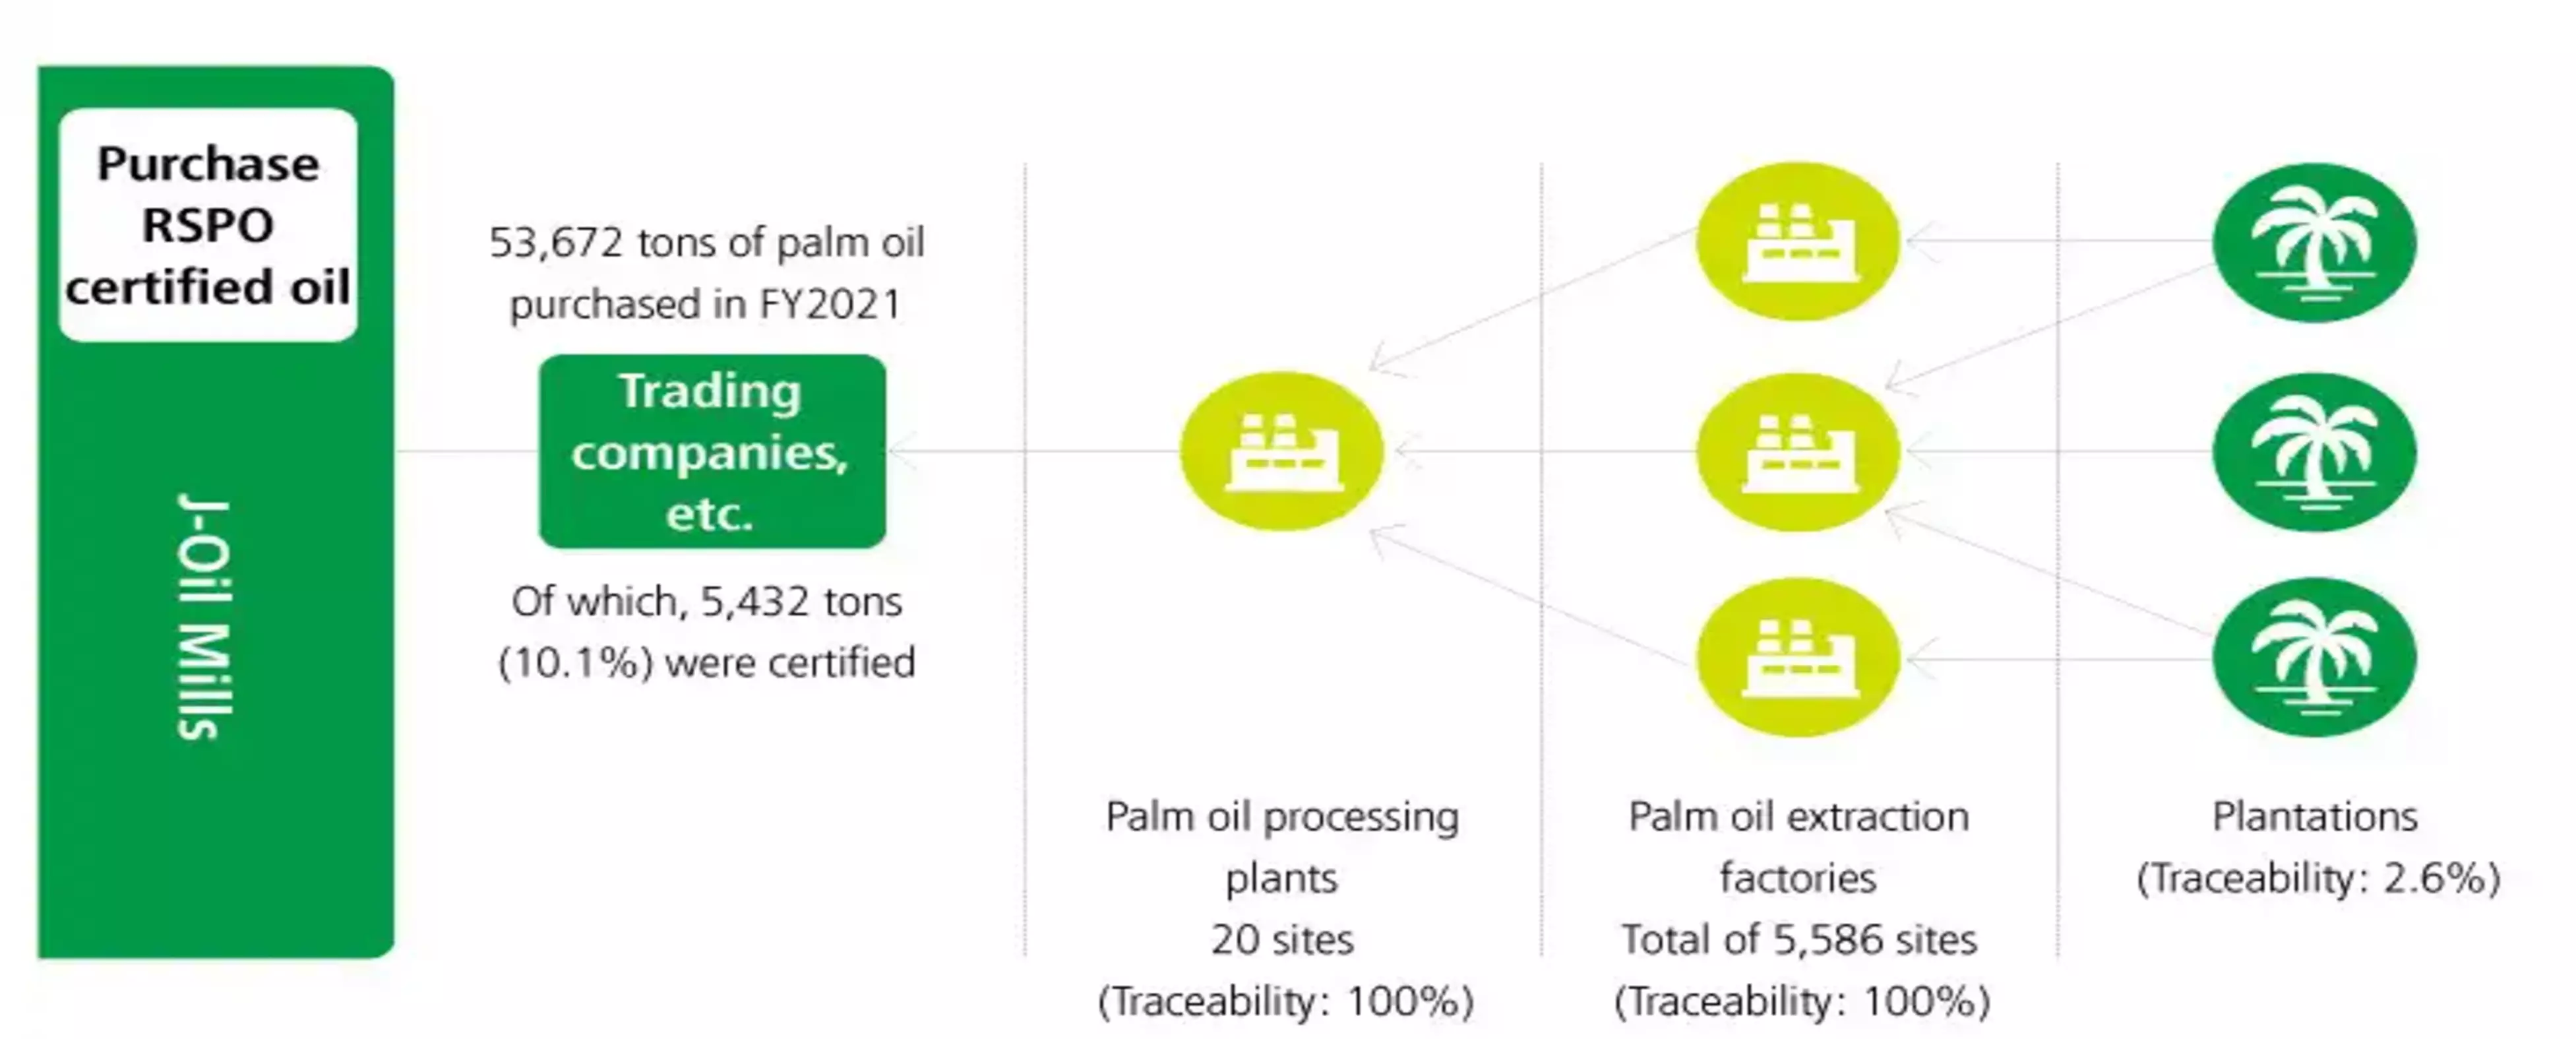 Palm oil supplier traceability survey 2022 results diagram